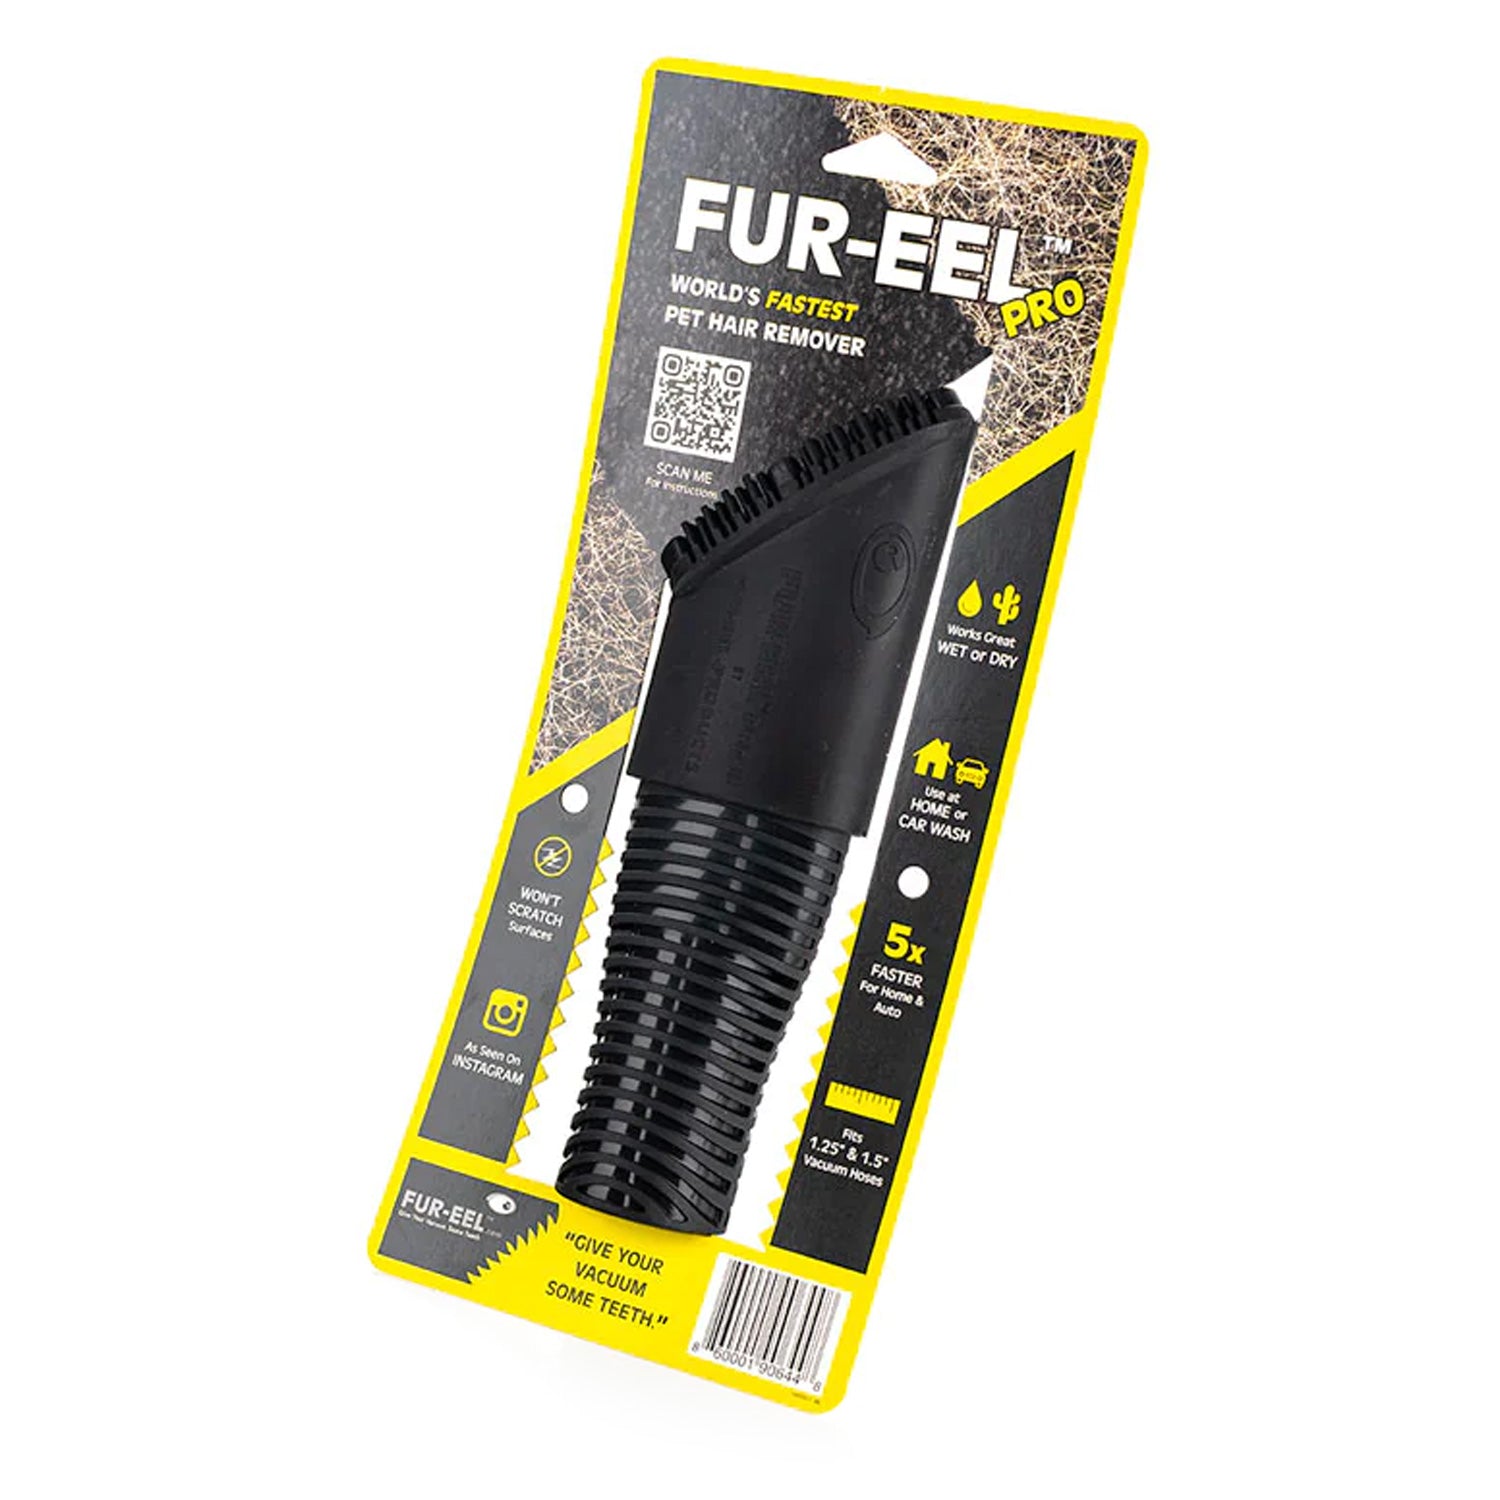 fur-eel-pro-pet-hair-remover-tool-combo-kit